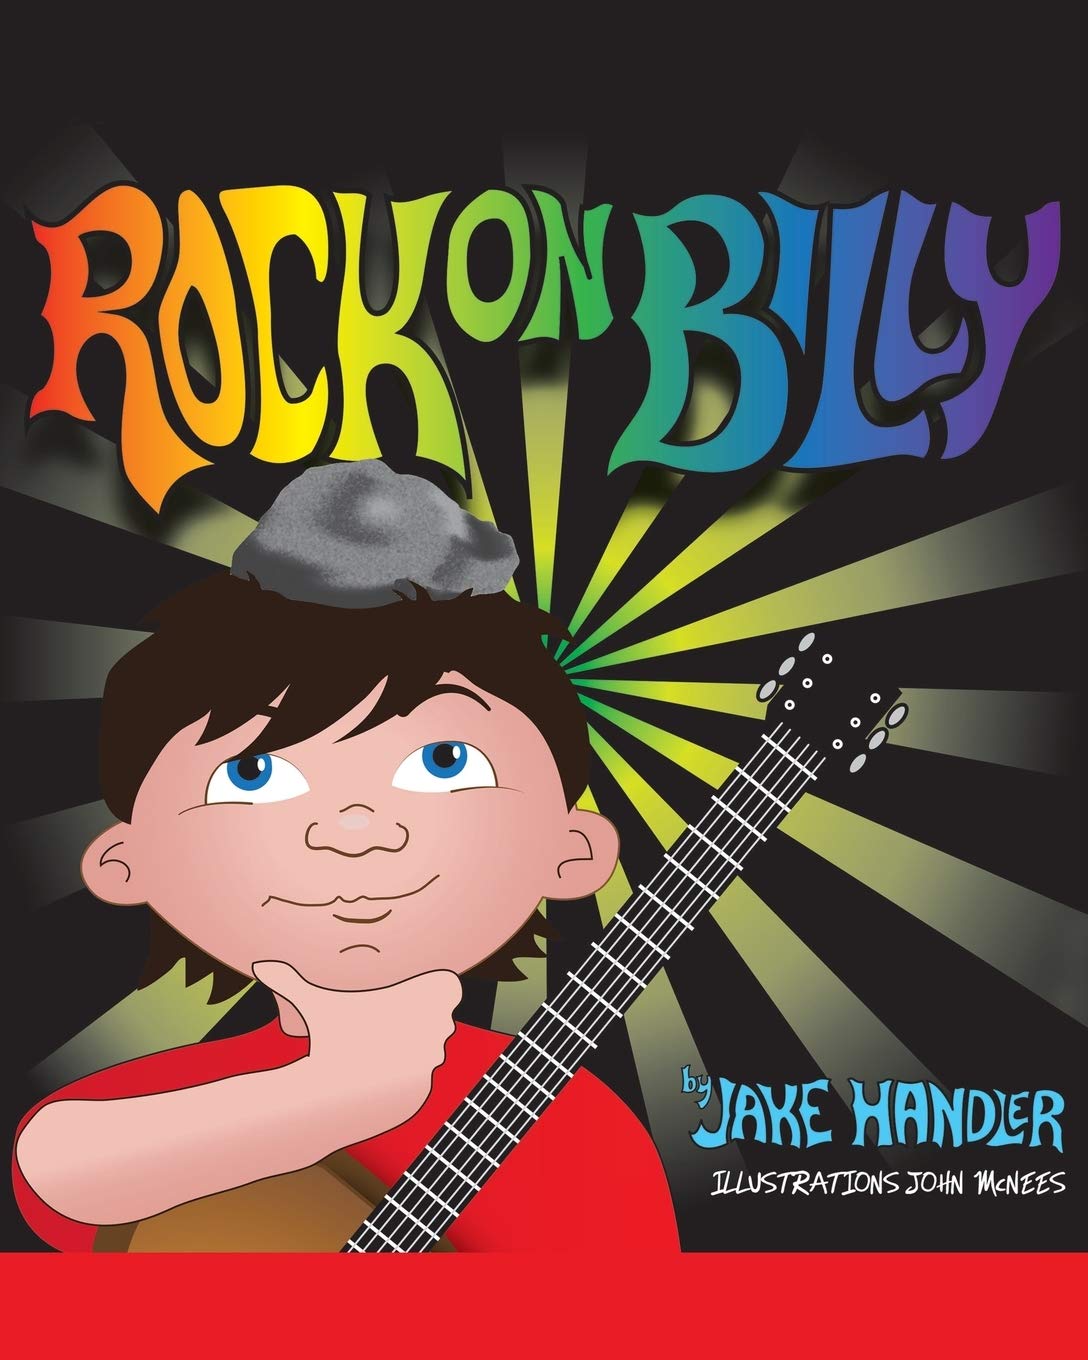 Jake Handler rock on billy